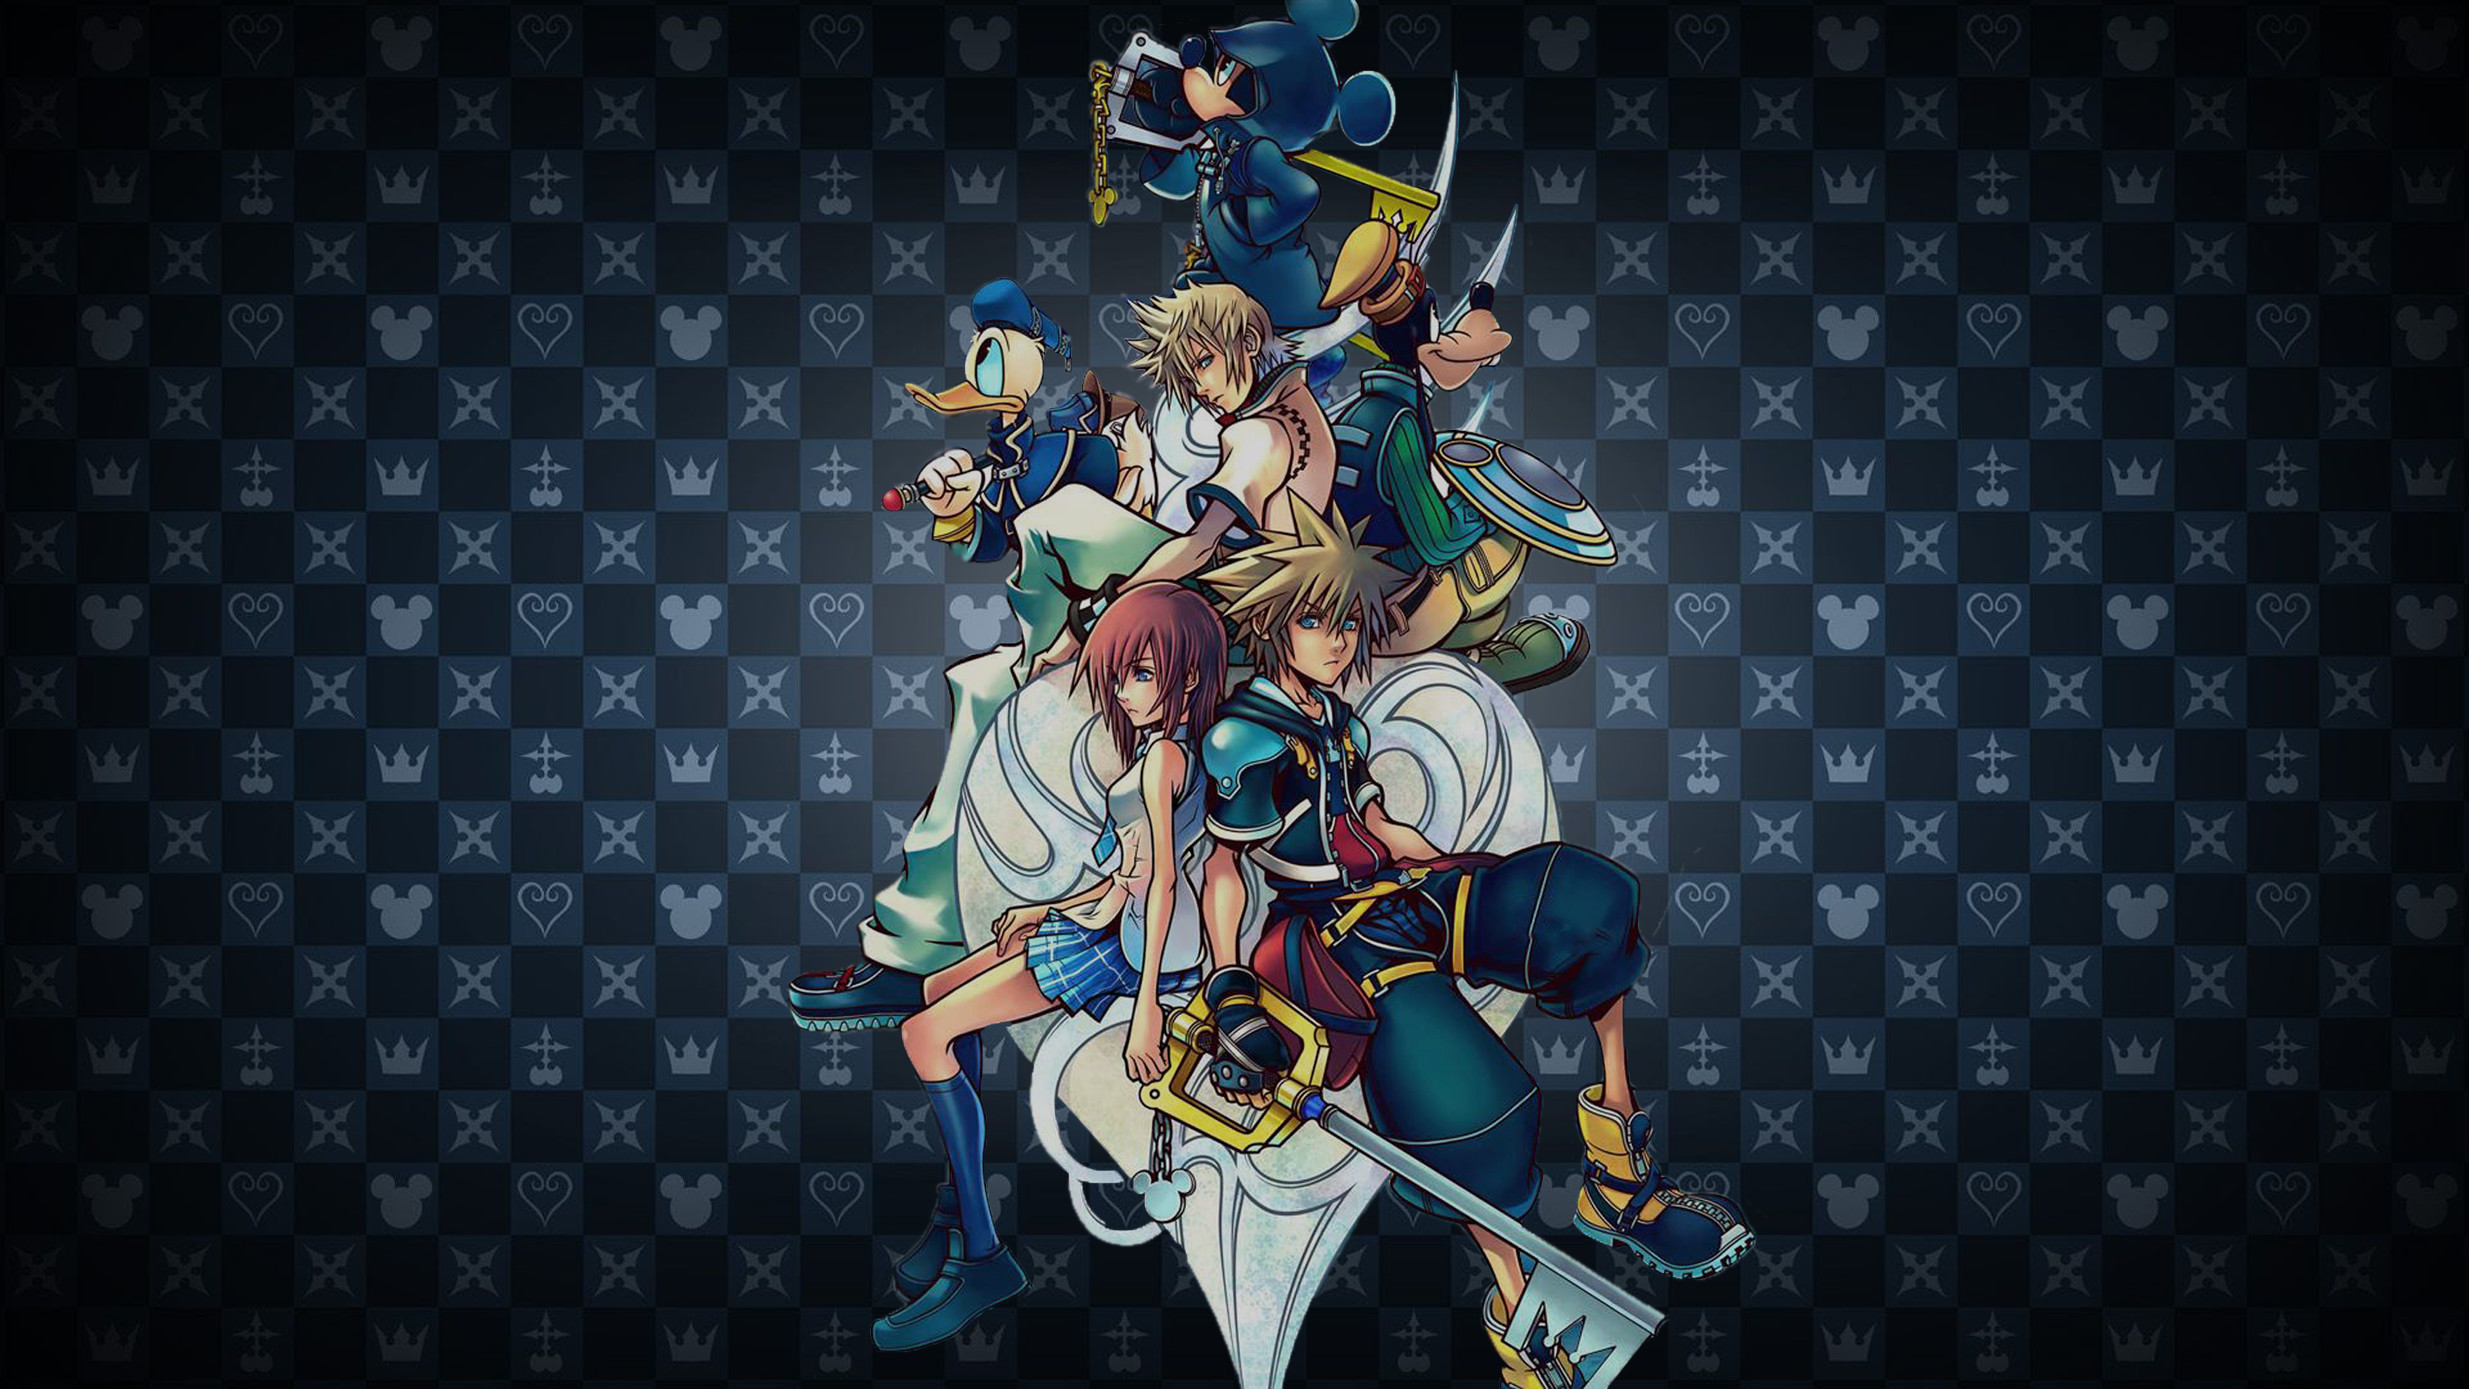 2469x1389 Kingdom Hearts 3 Wallpaper Free Download #6996344 - HD Wallpapers